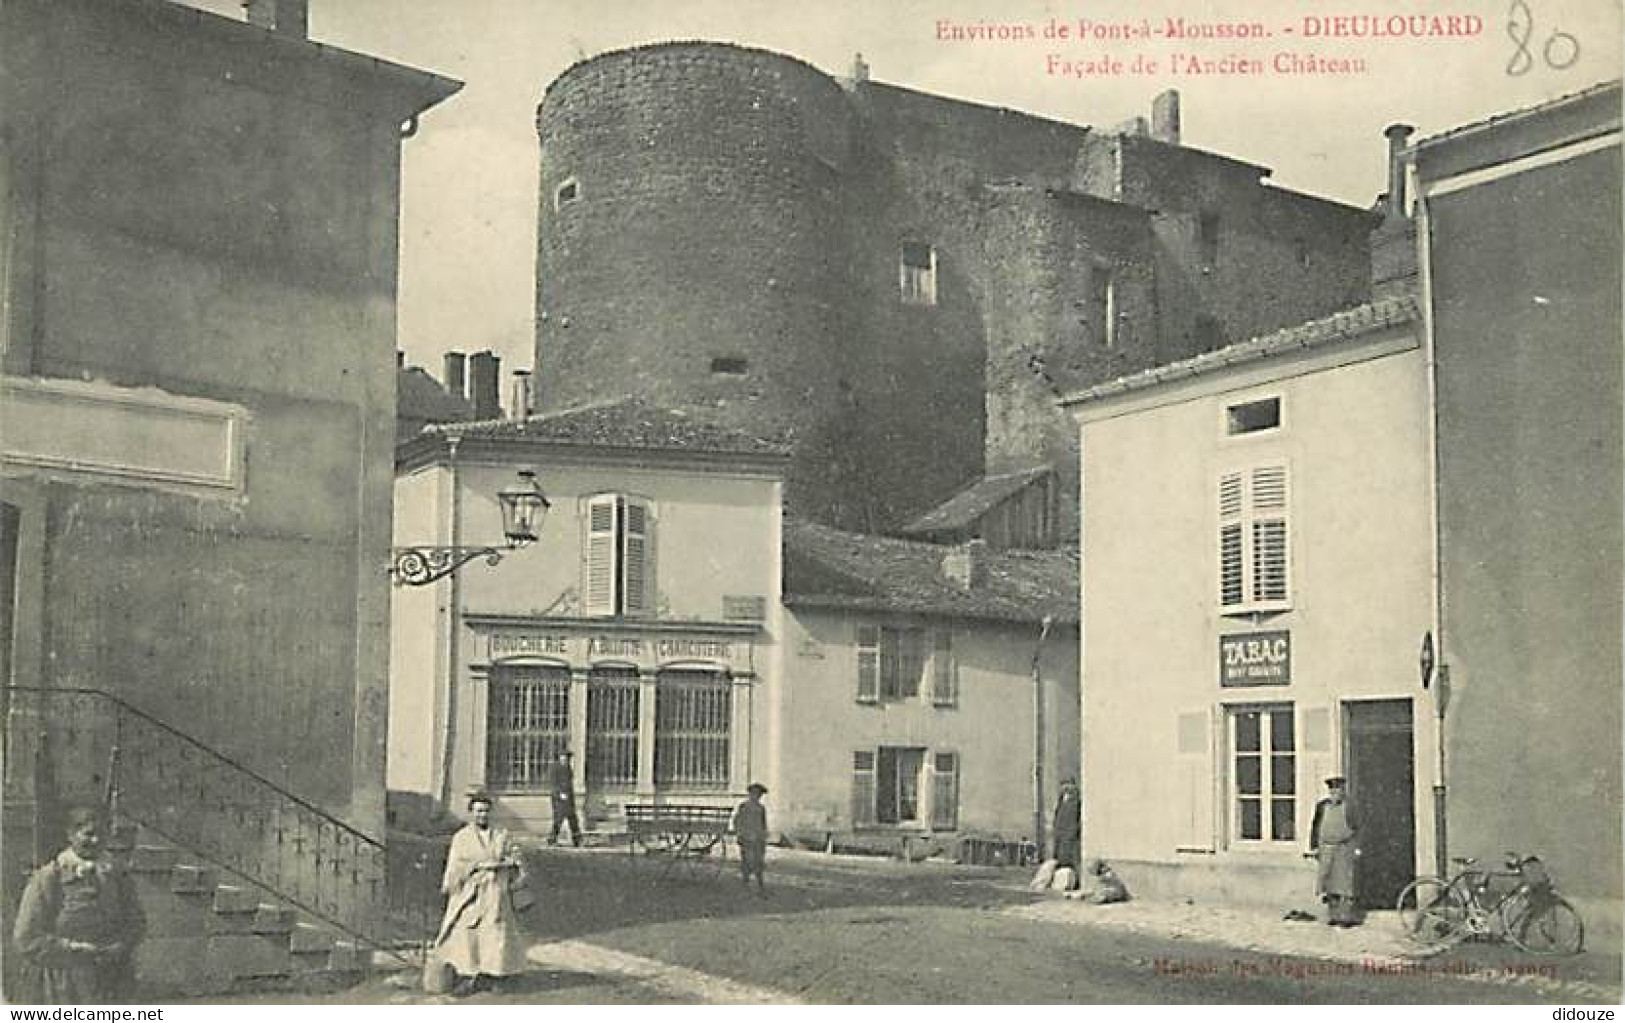 54 - Dieulouard - Façade De L'Ancien Château - Animée - CPA - Voir Scans Recto-Verso - Dieulouard